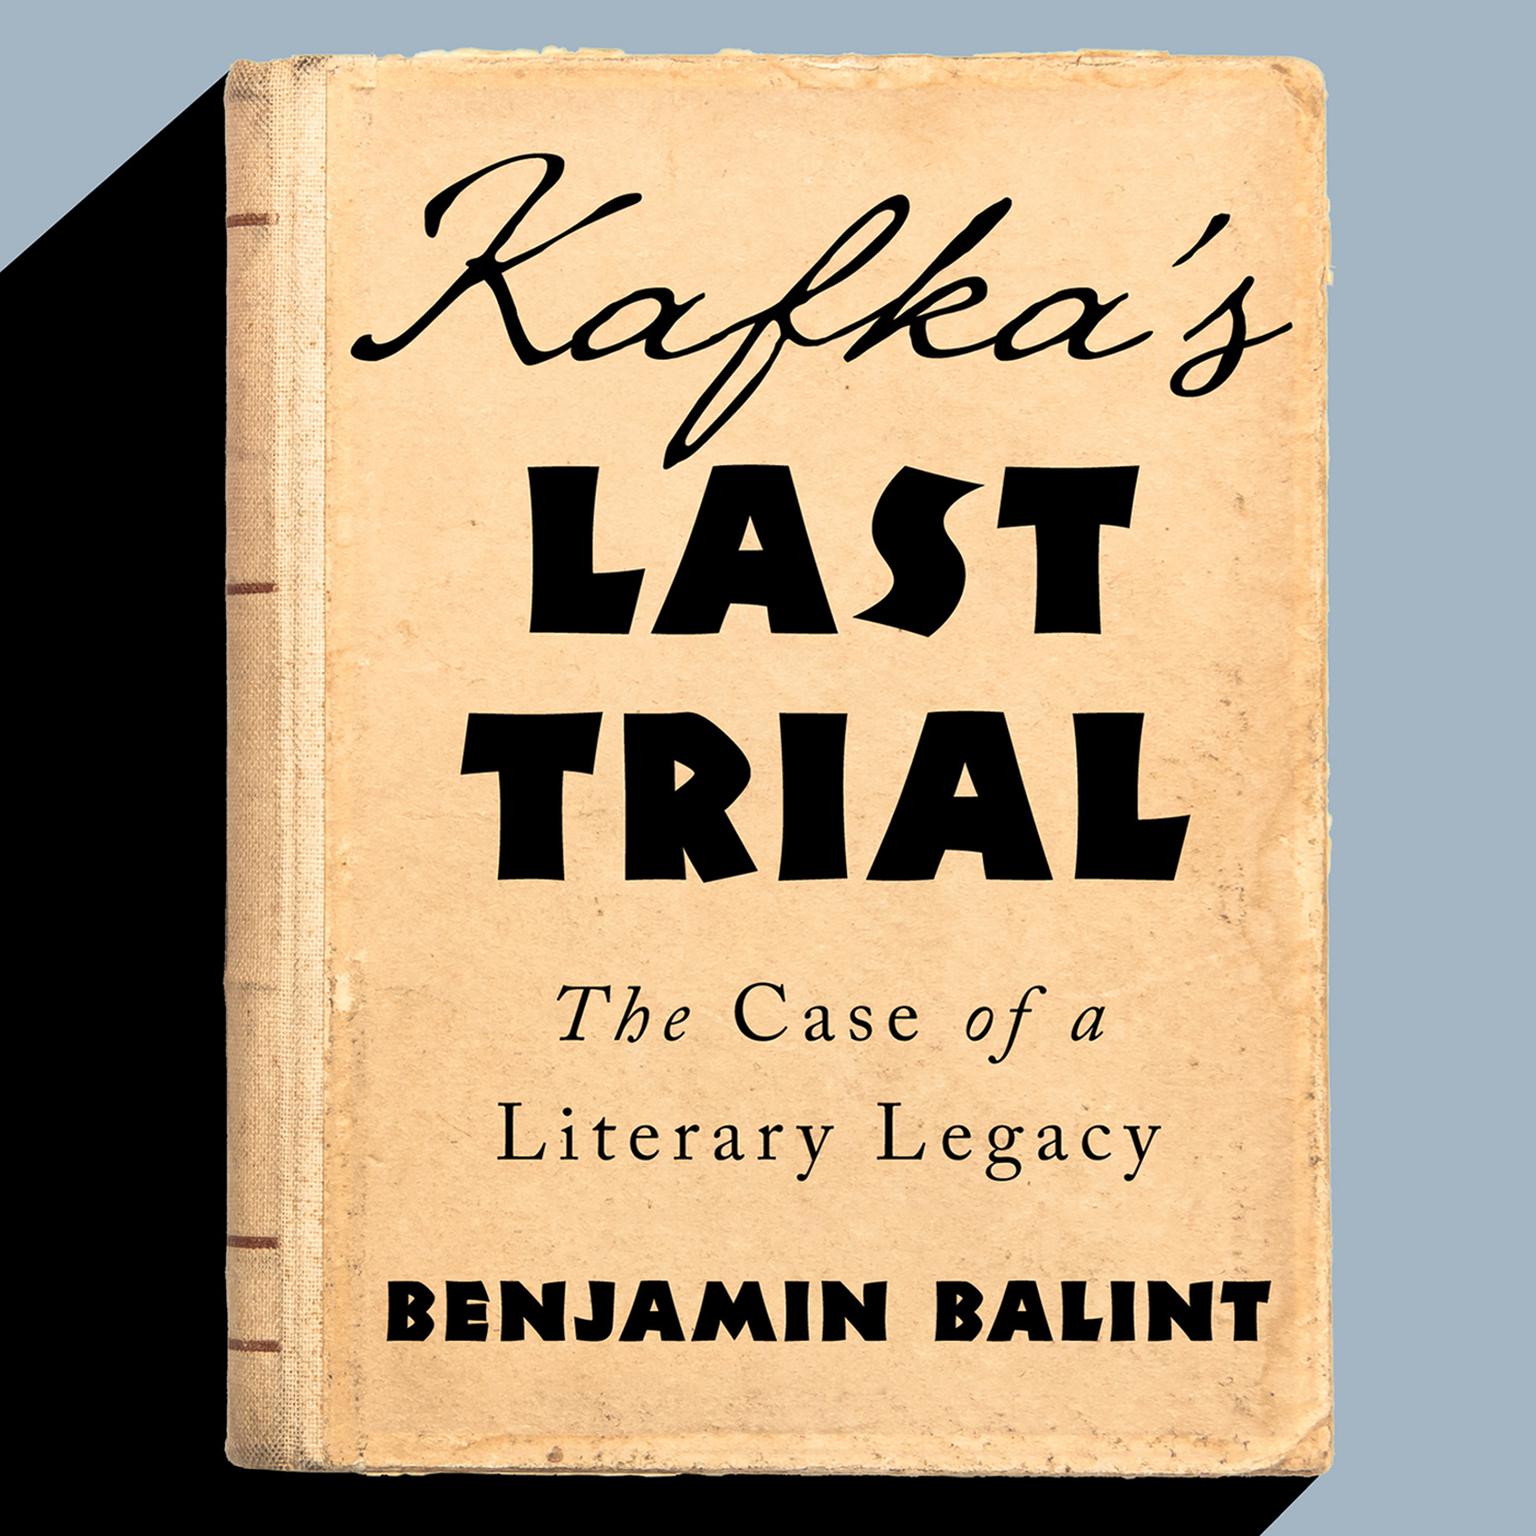 Kafkas Last Trial: The Case of a Literary Legacy Audiobook, by Benjamin Balint